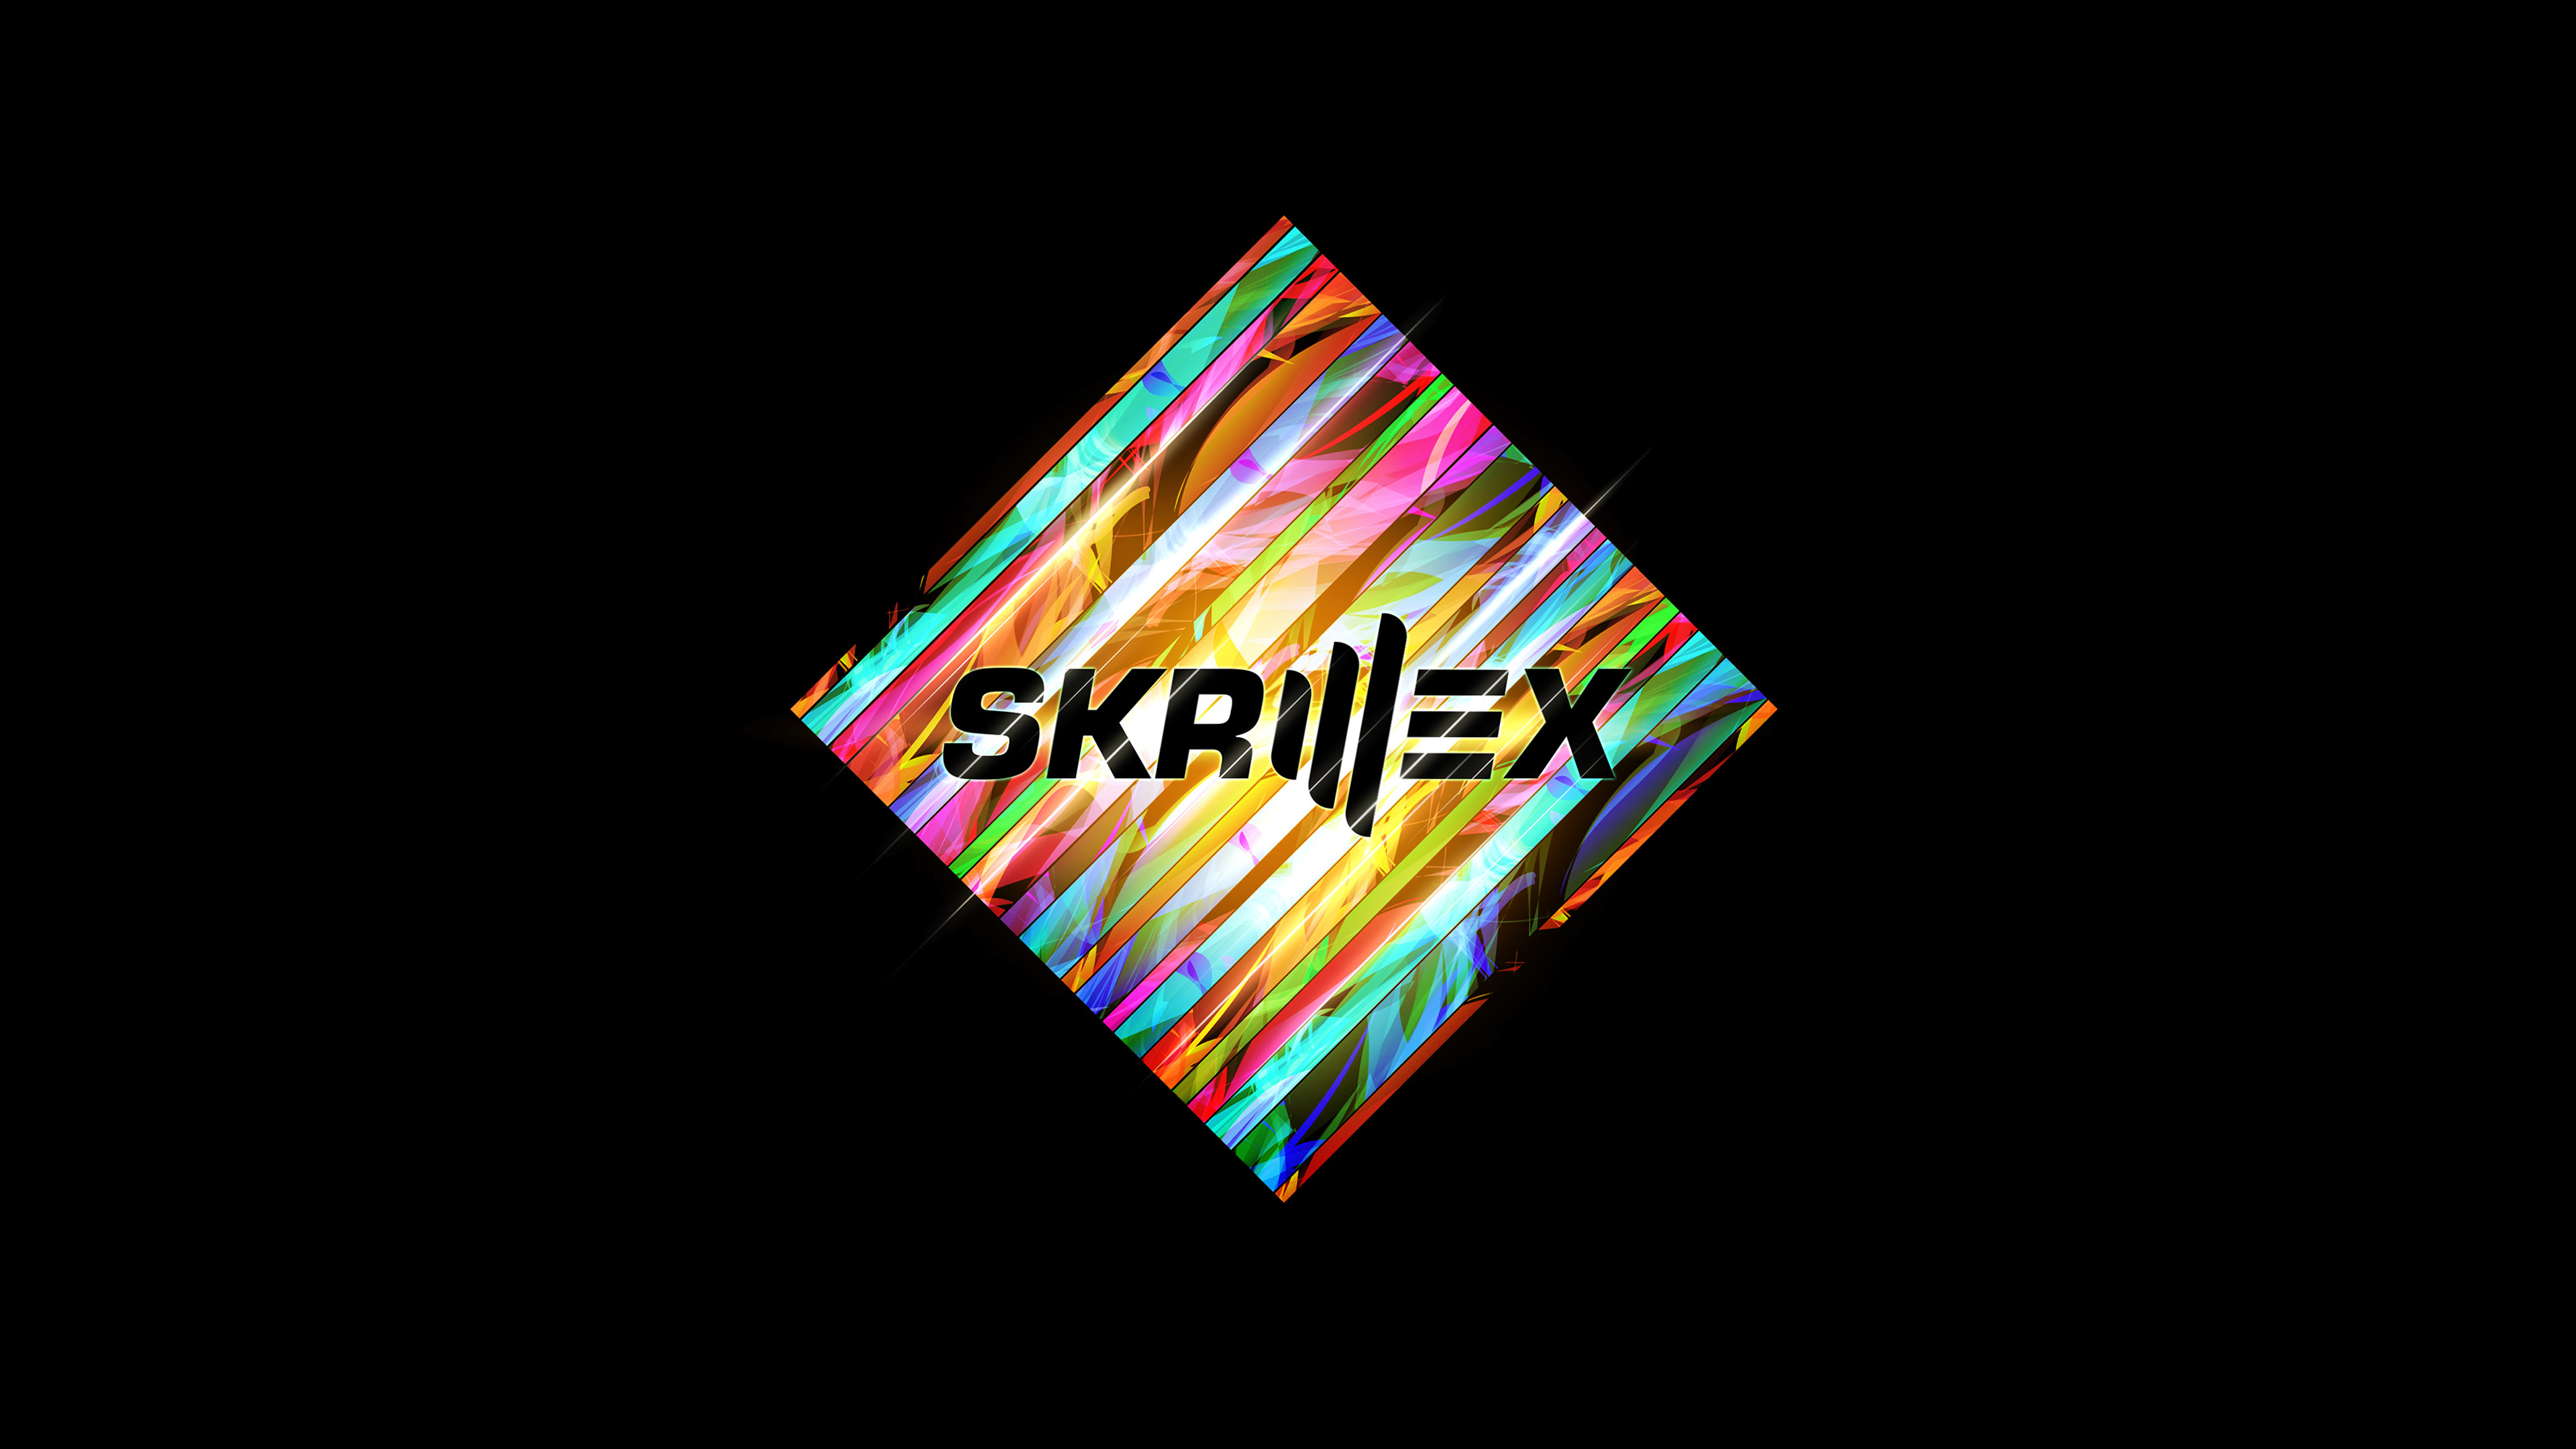 Skrillex Image Wallpapers